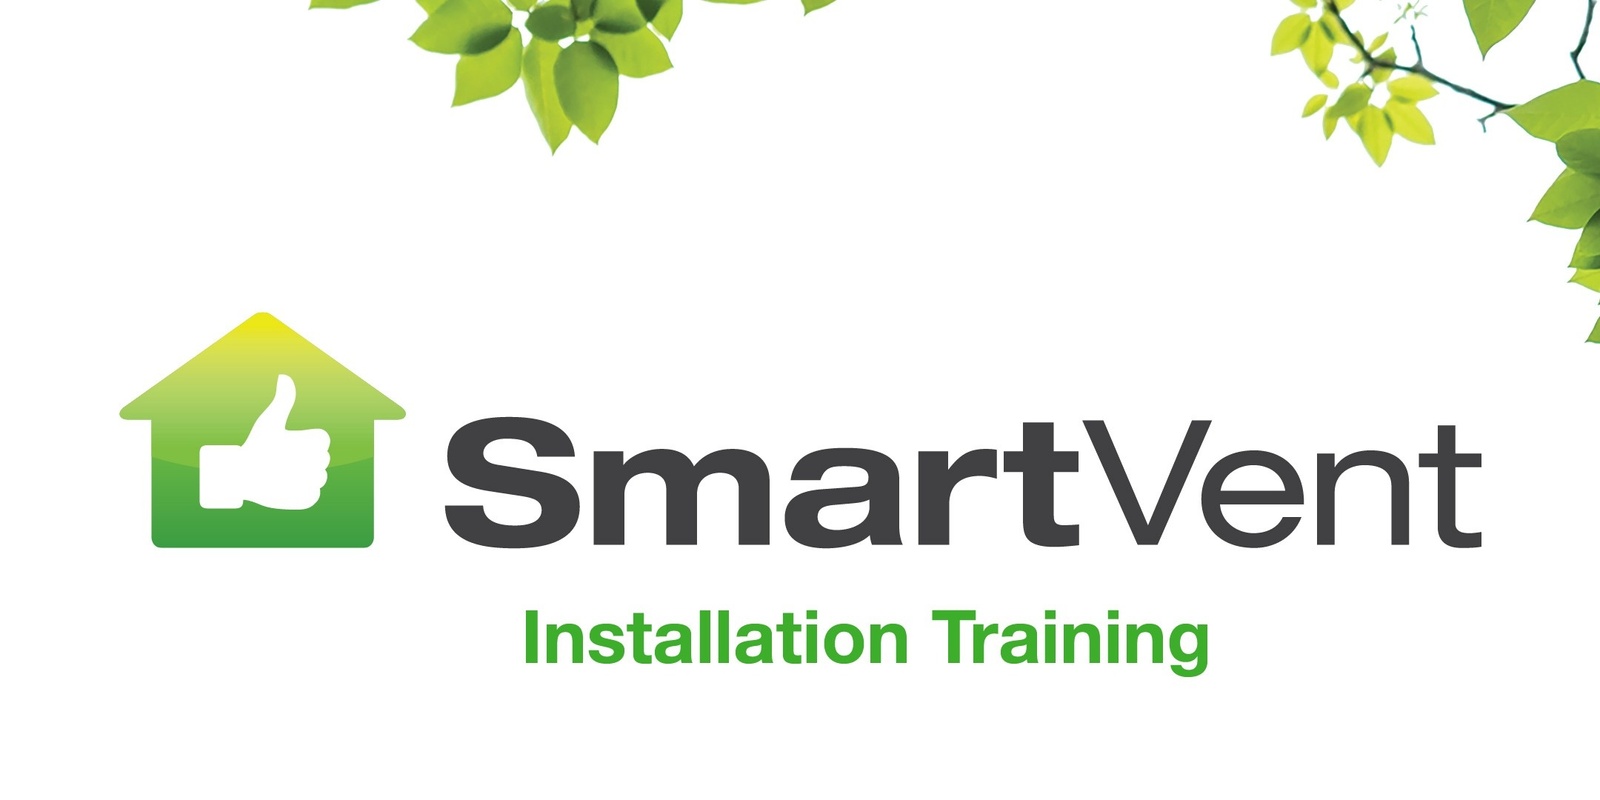 Banner image for SmartVent Installation Training - Auckland